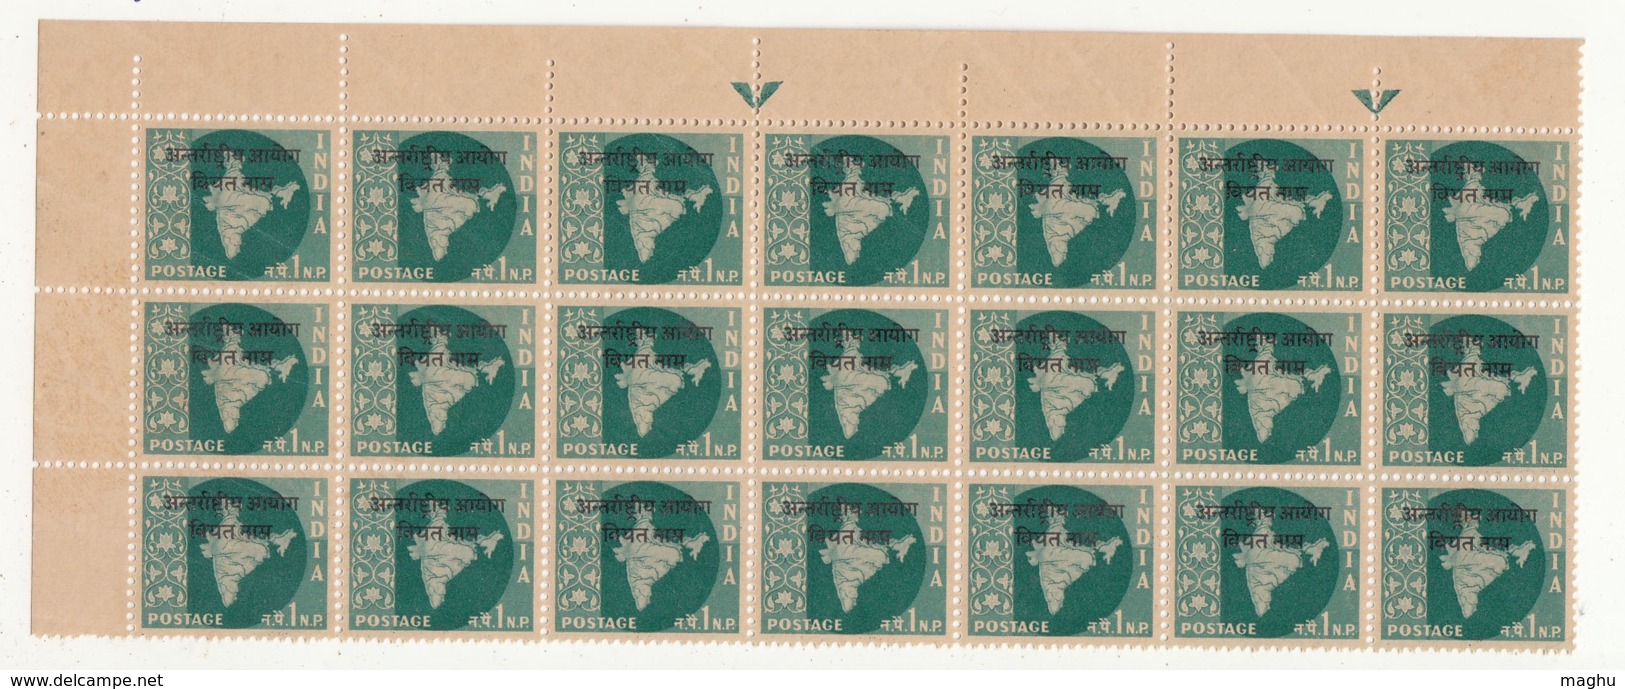 Block Of 21, 1np, Oveperprint Of 'Vietnam' On Map Series, Watermark Ashokan, India MNH 1963 - Franquicia Militar